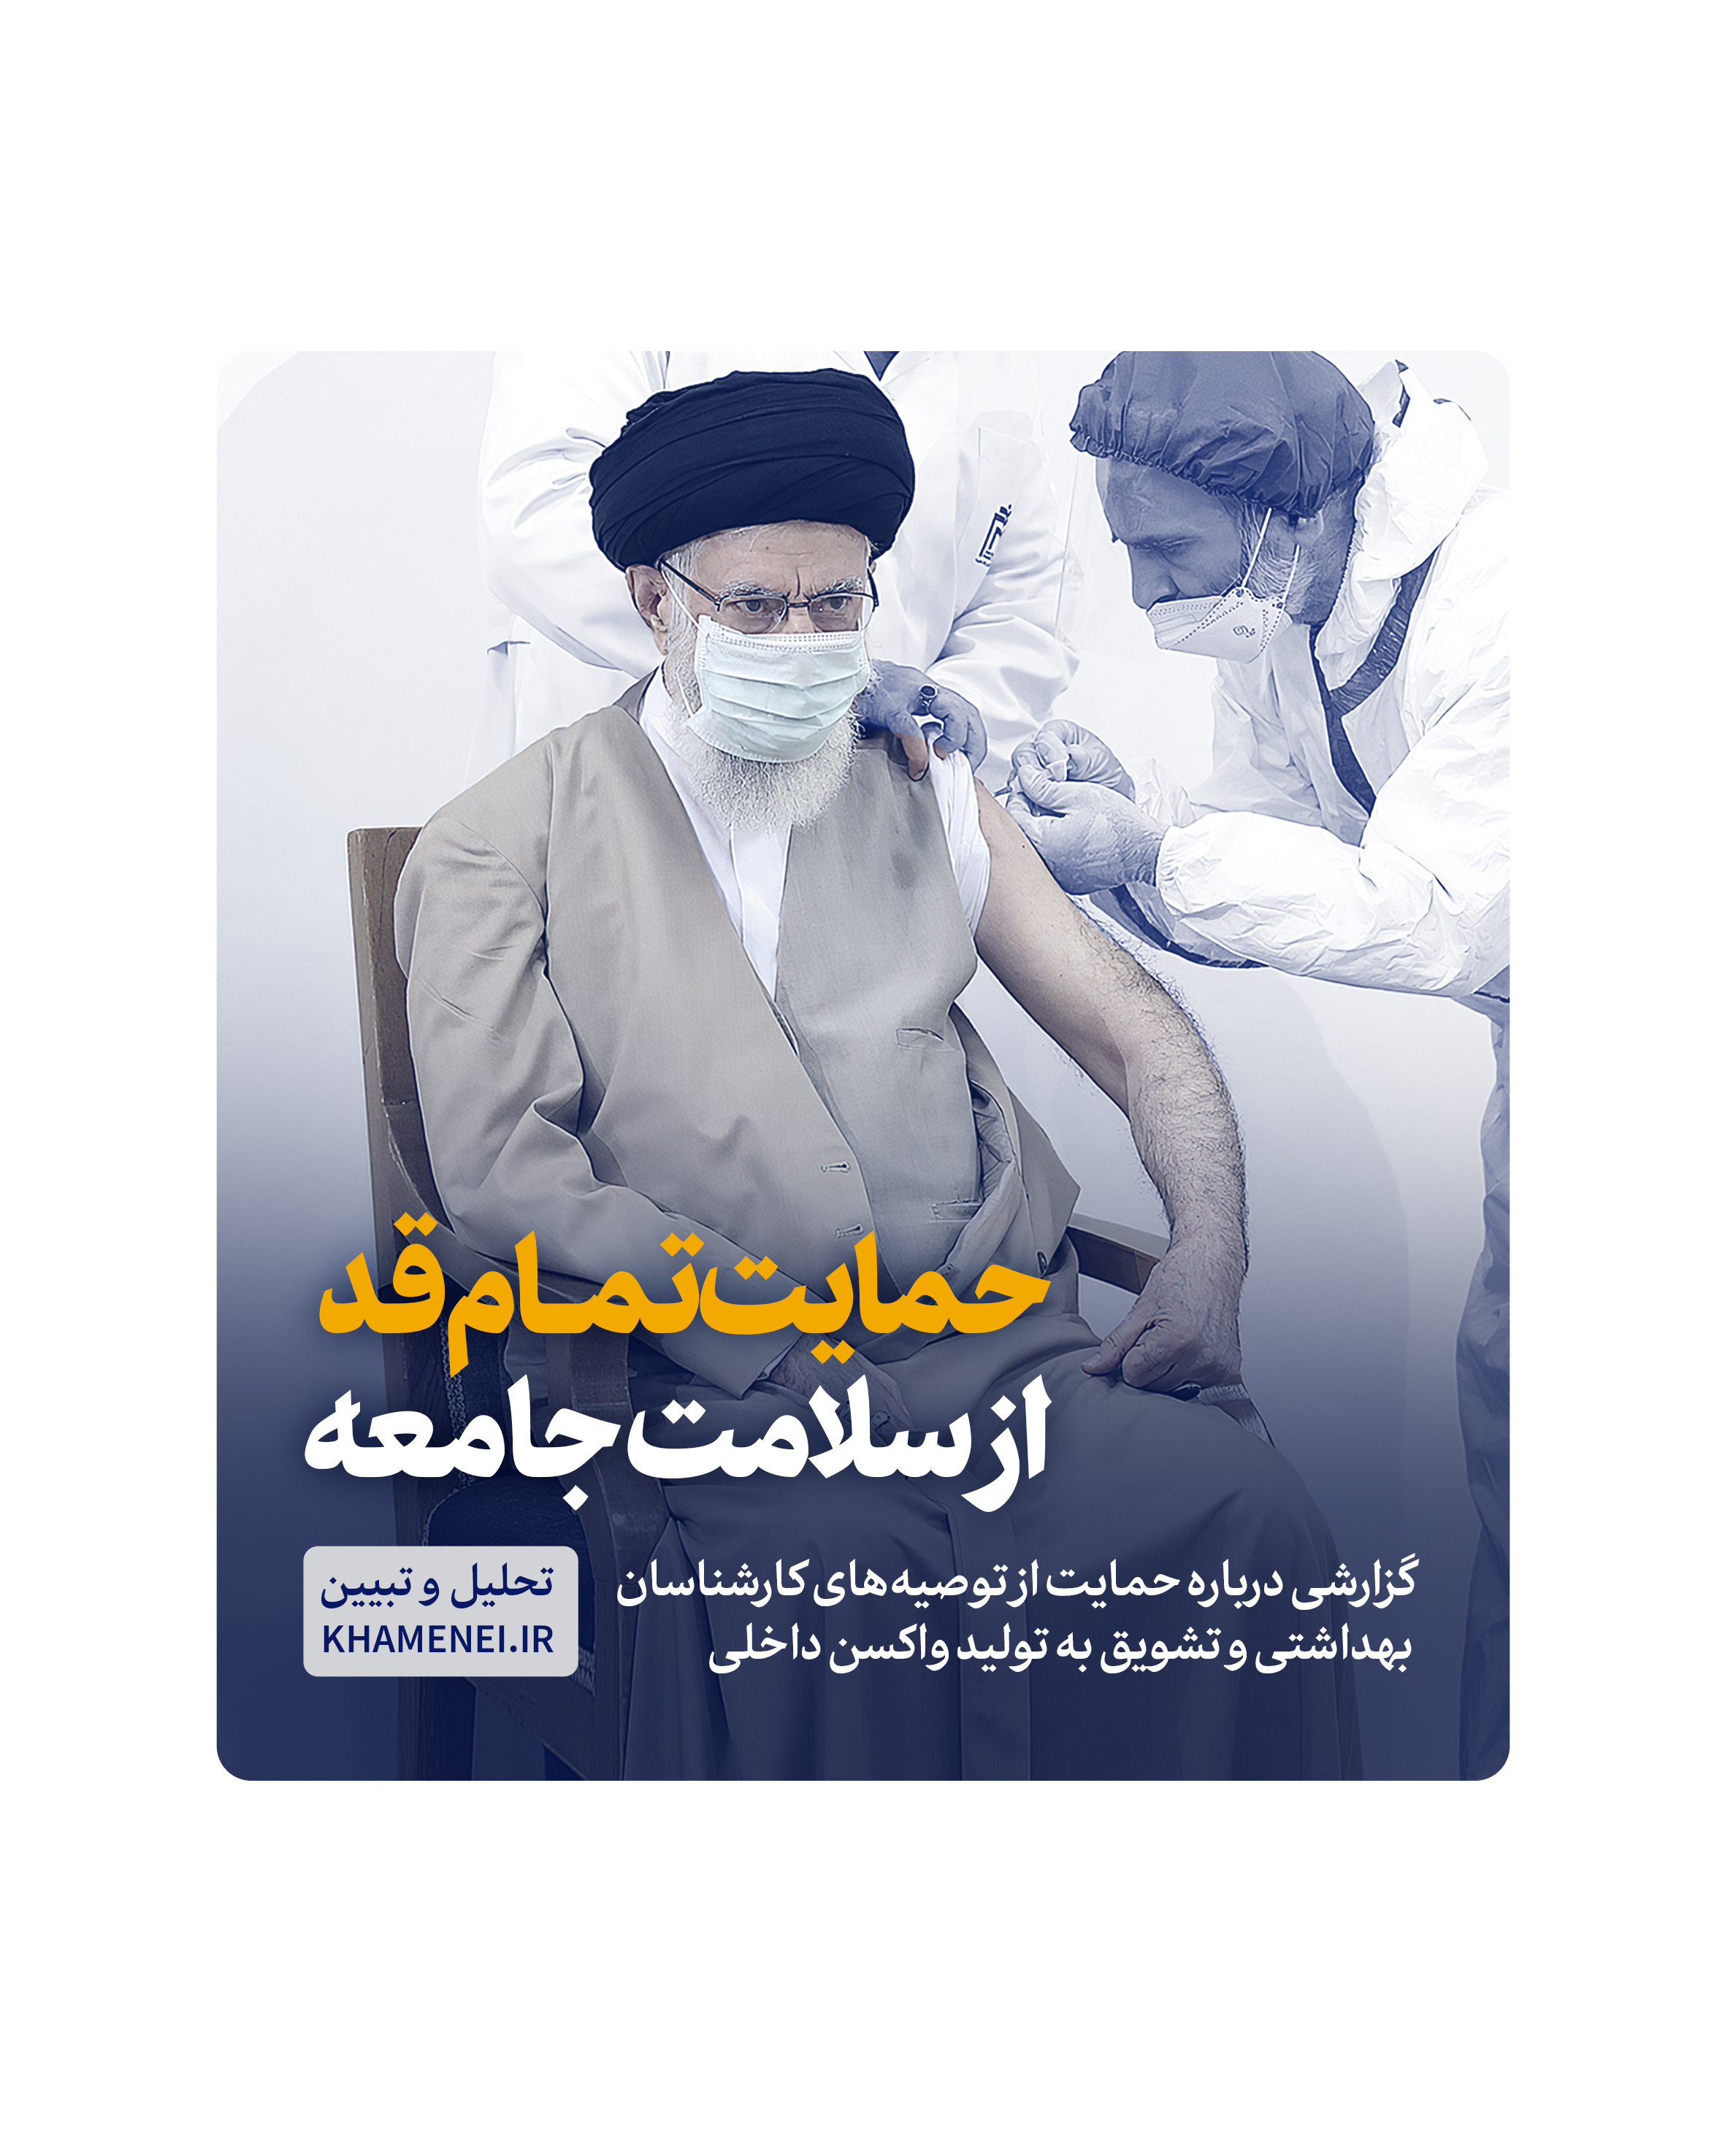 https://idc0-cdn0.khamenei.ir/ndata/news/48254/hemayat.jpg